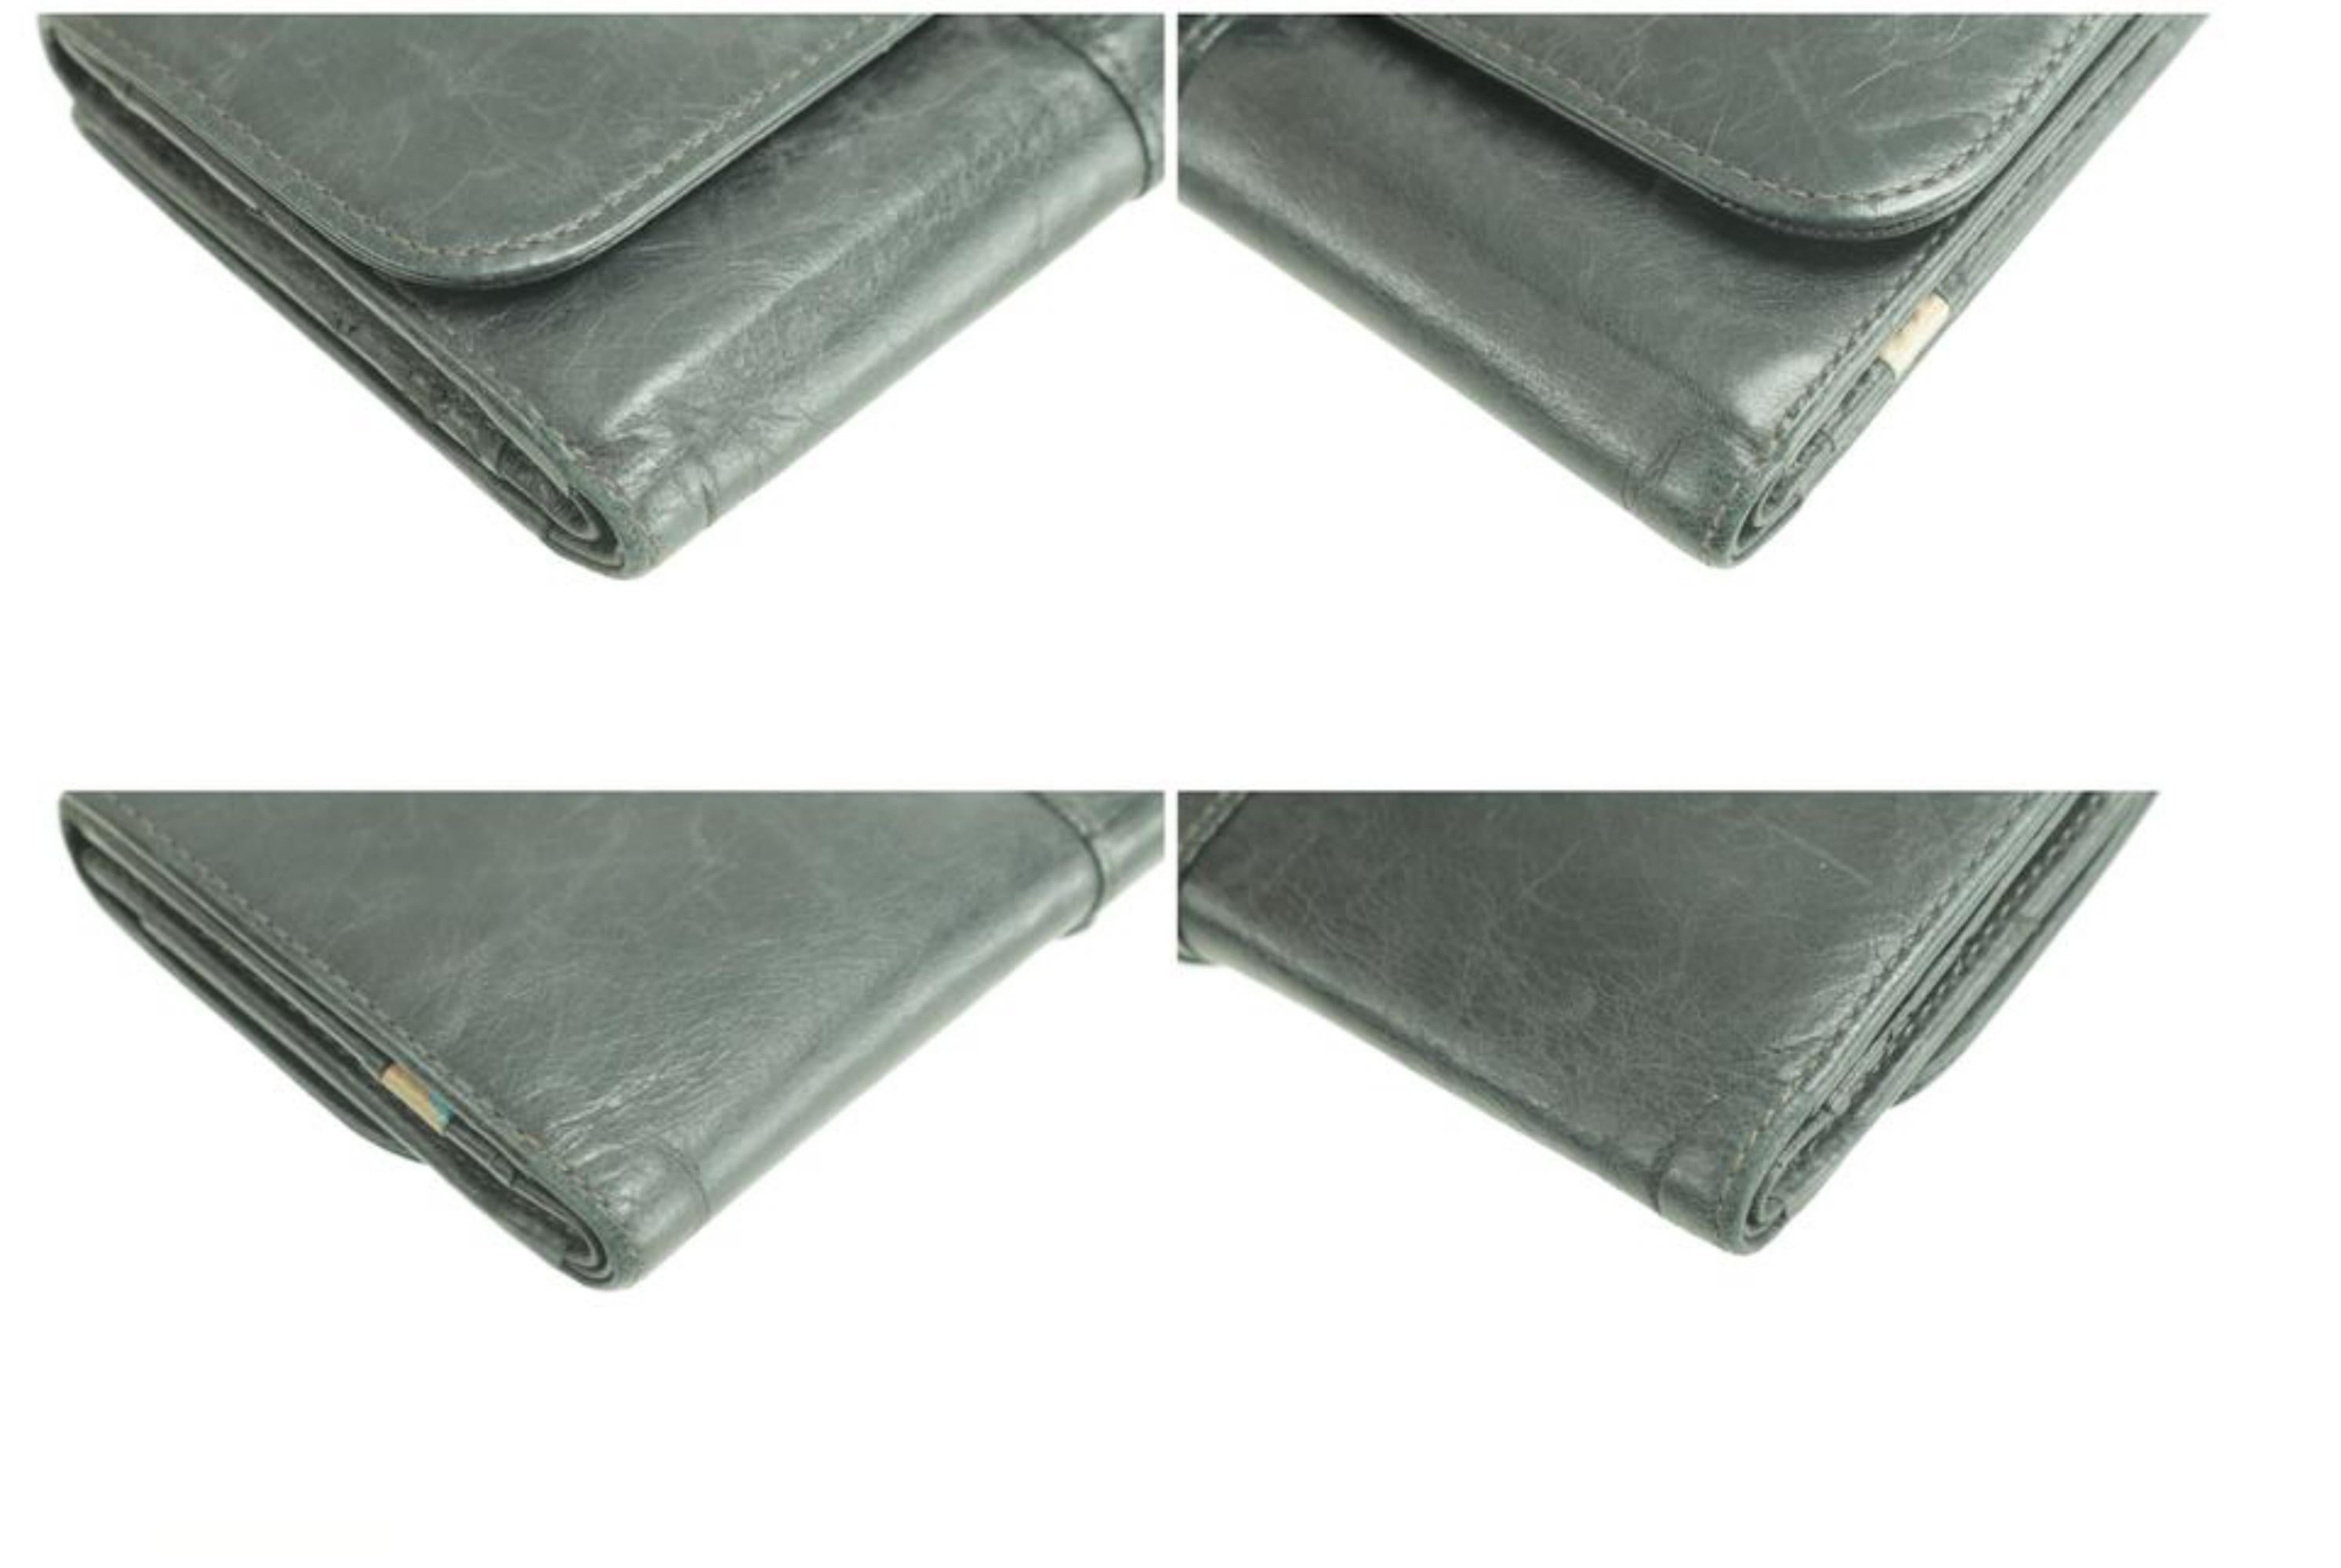 Paul Smith Belt Long Flap Wallet Black Leather Bifold 0M46 For Sale 7